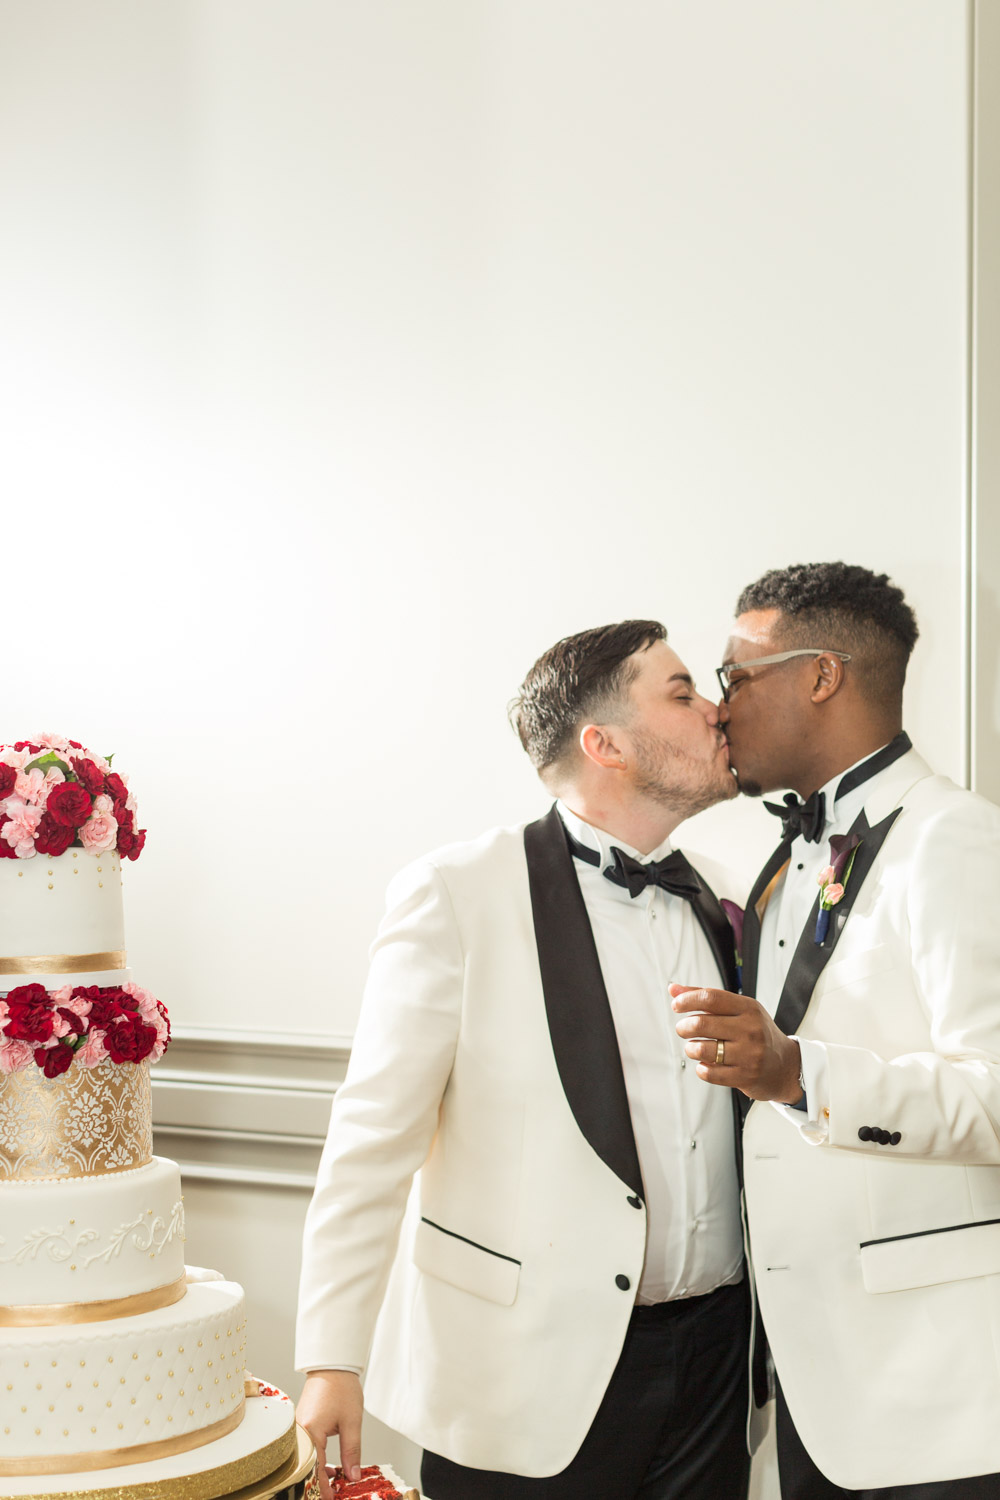 Tavion + Andrew: A Greenville, South Carolina, summer LGBTQ+ wedding cake cutting